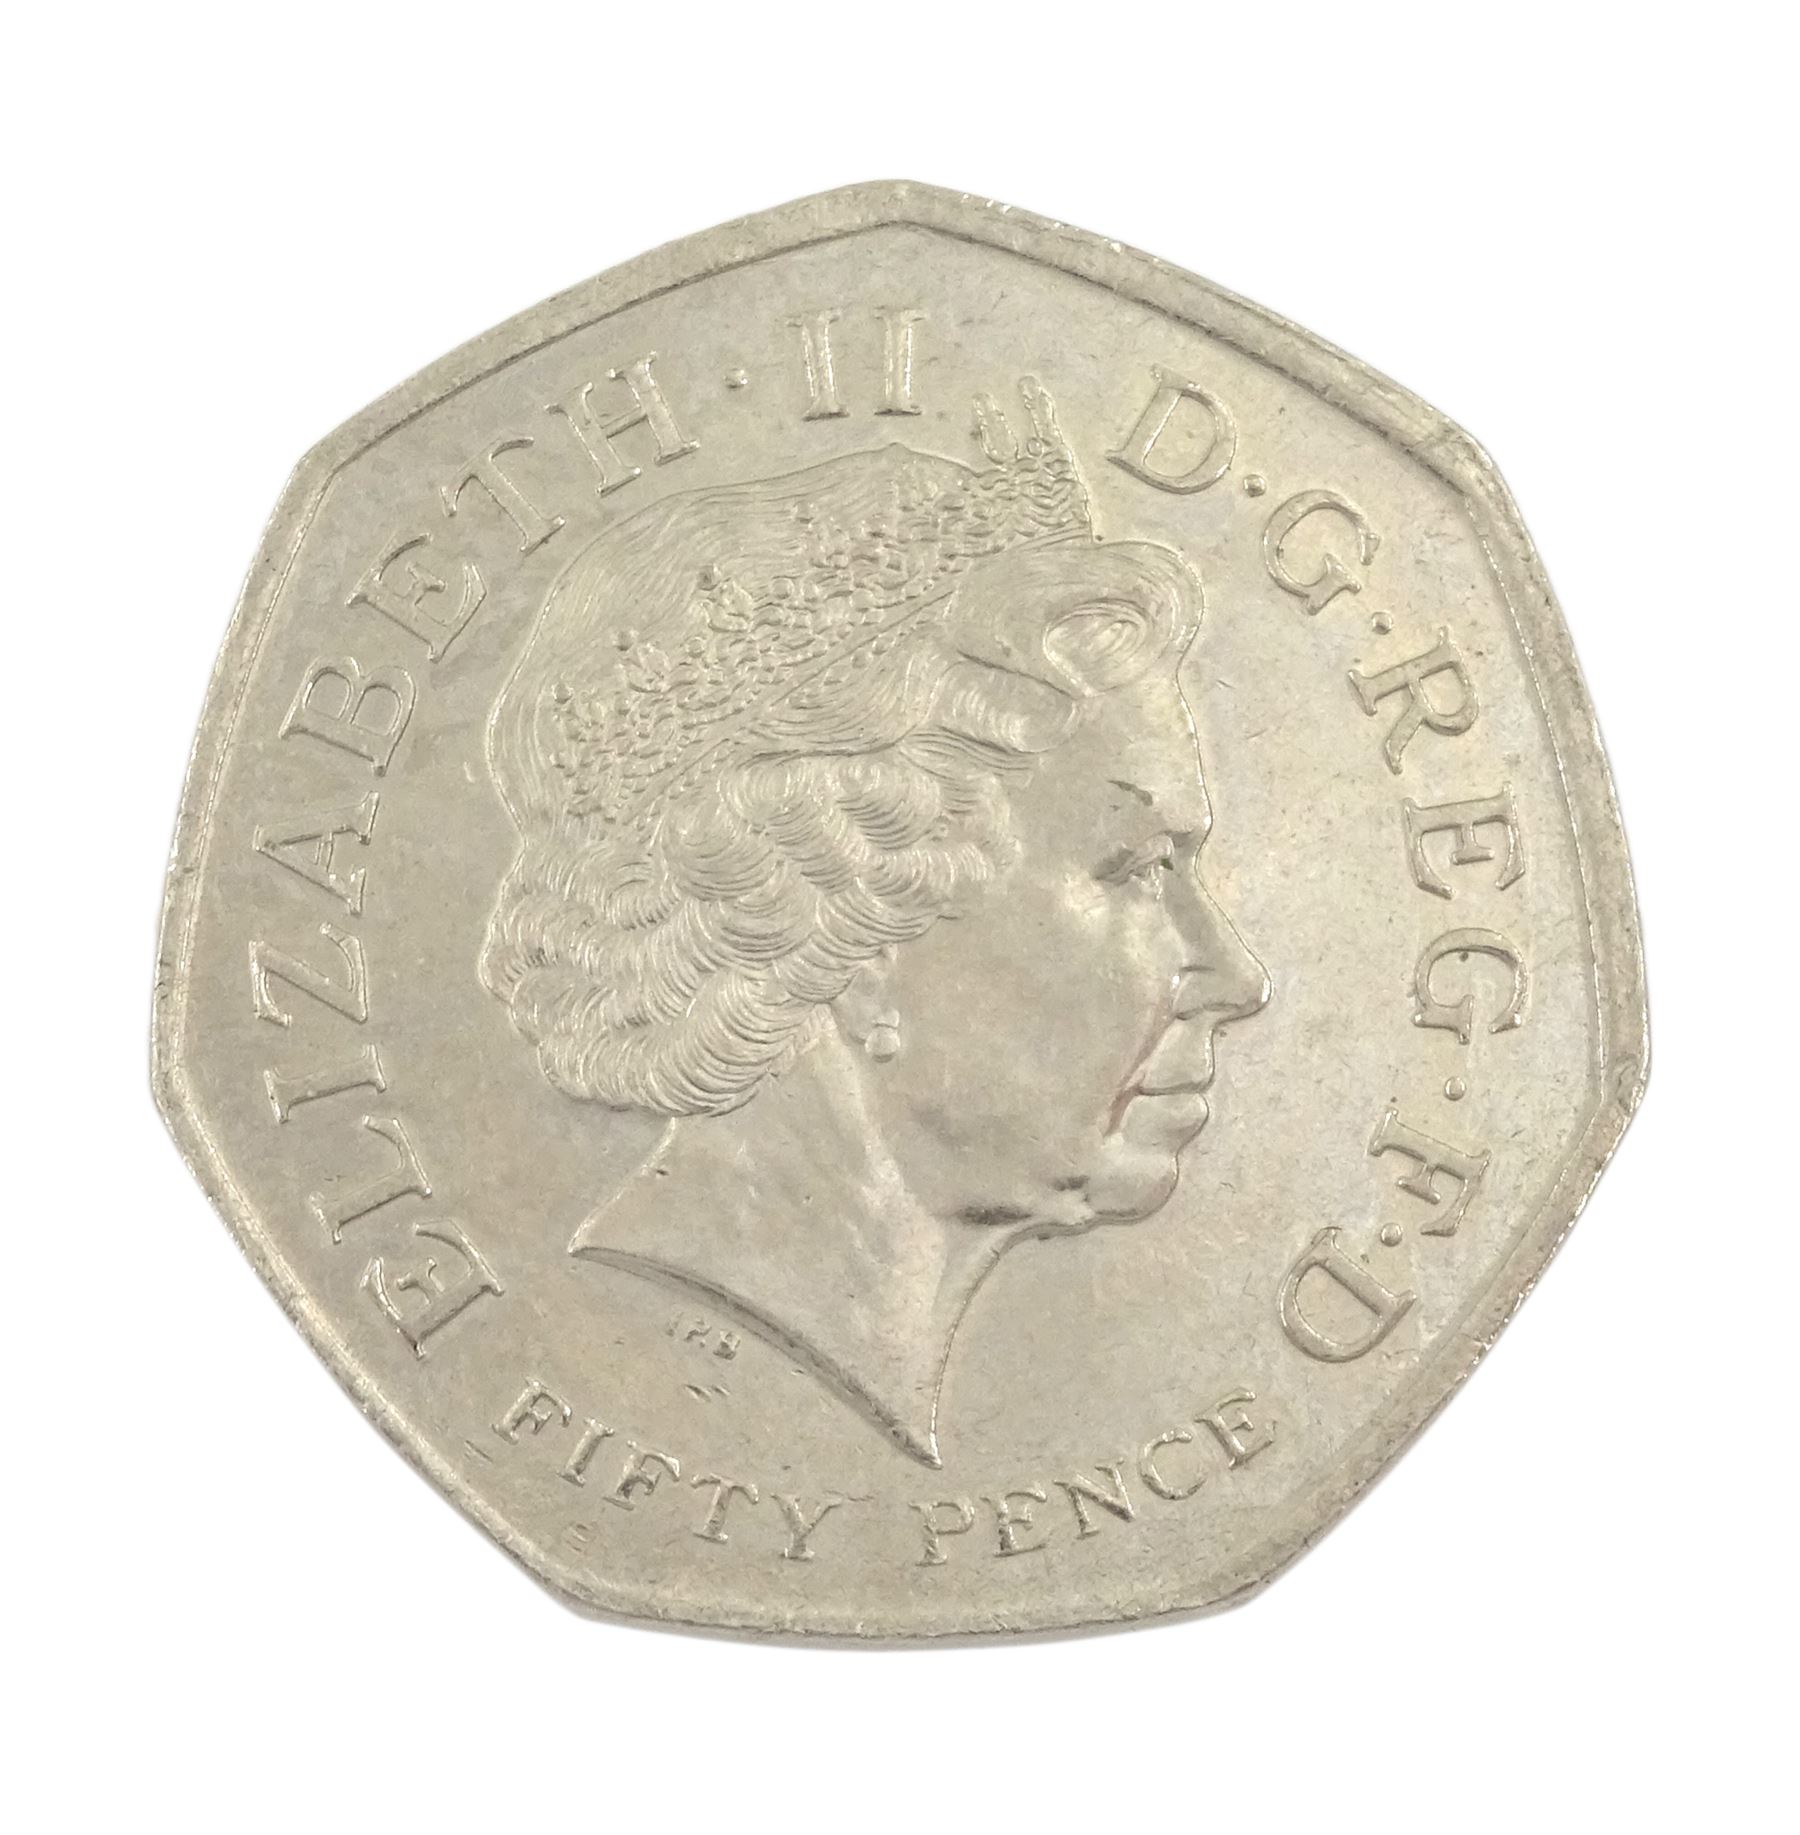 Queen Elizabeth II United Kingdom 2009 Kew Gardens fifty pence coin - Image 2 of 2